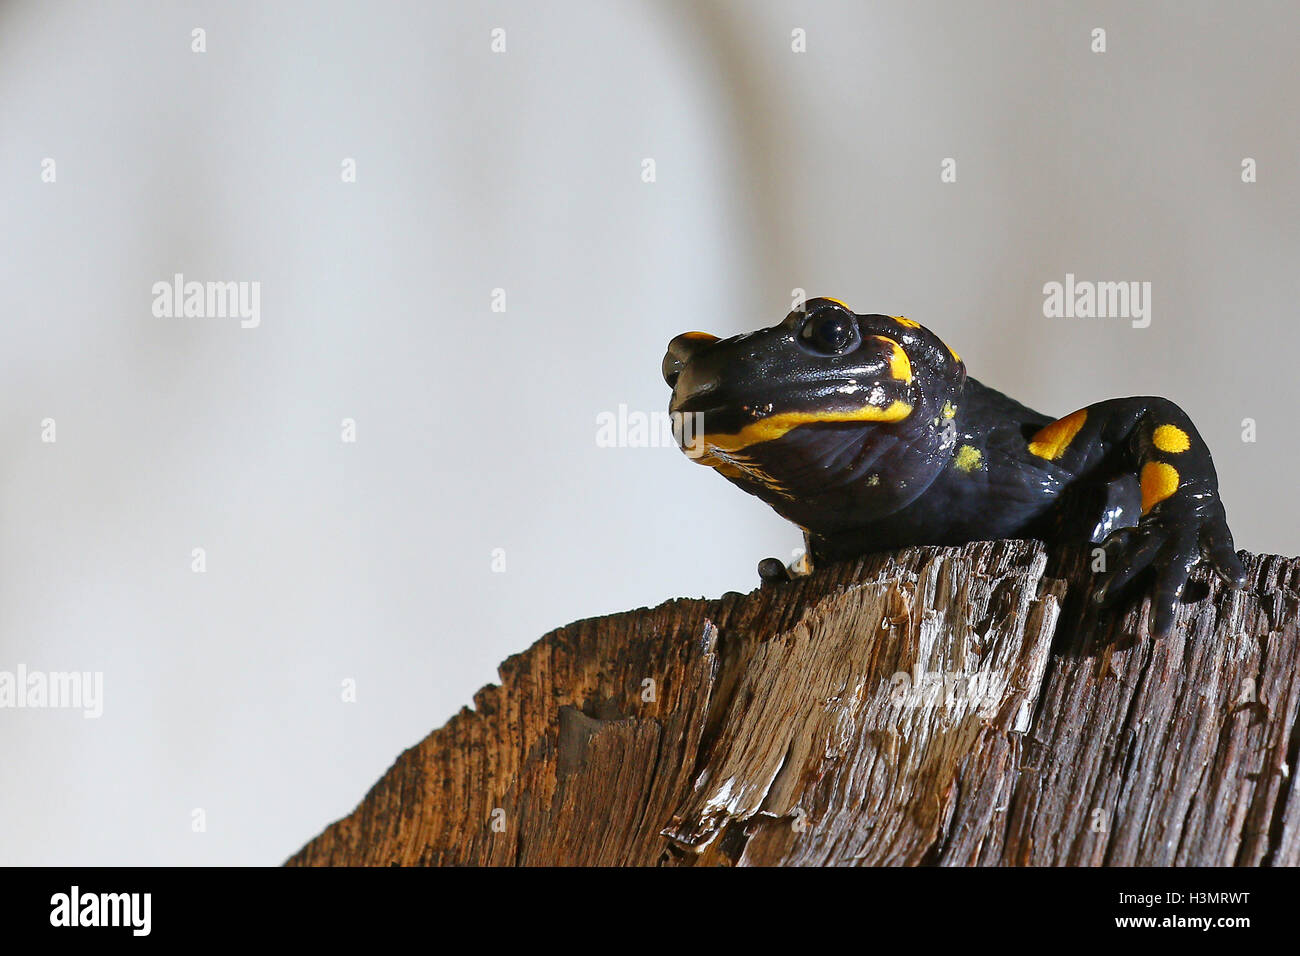 Nocturnal  amphibian, a salamander, on a log Stock Photo